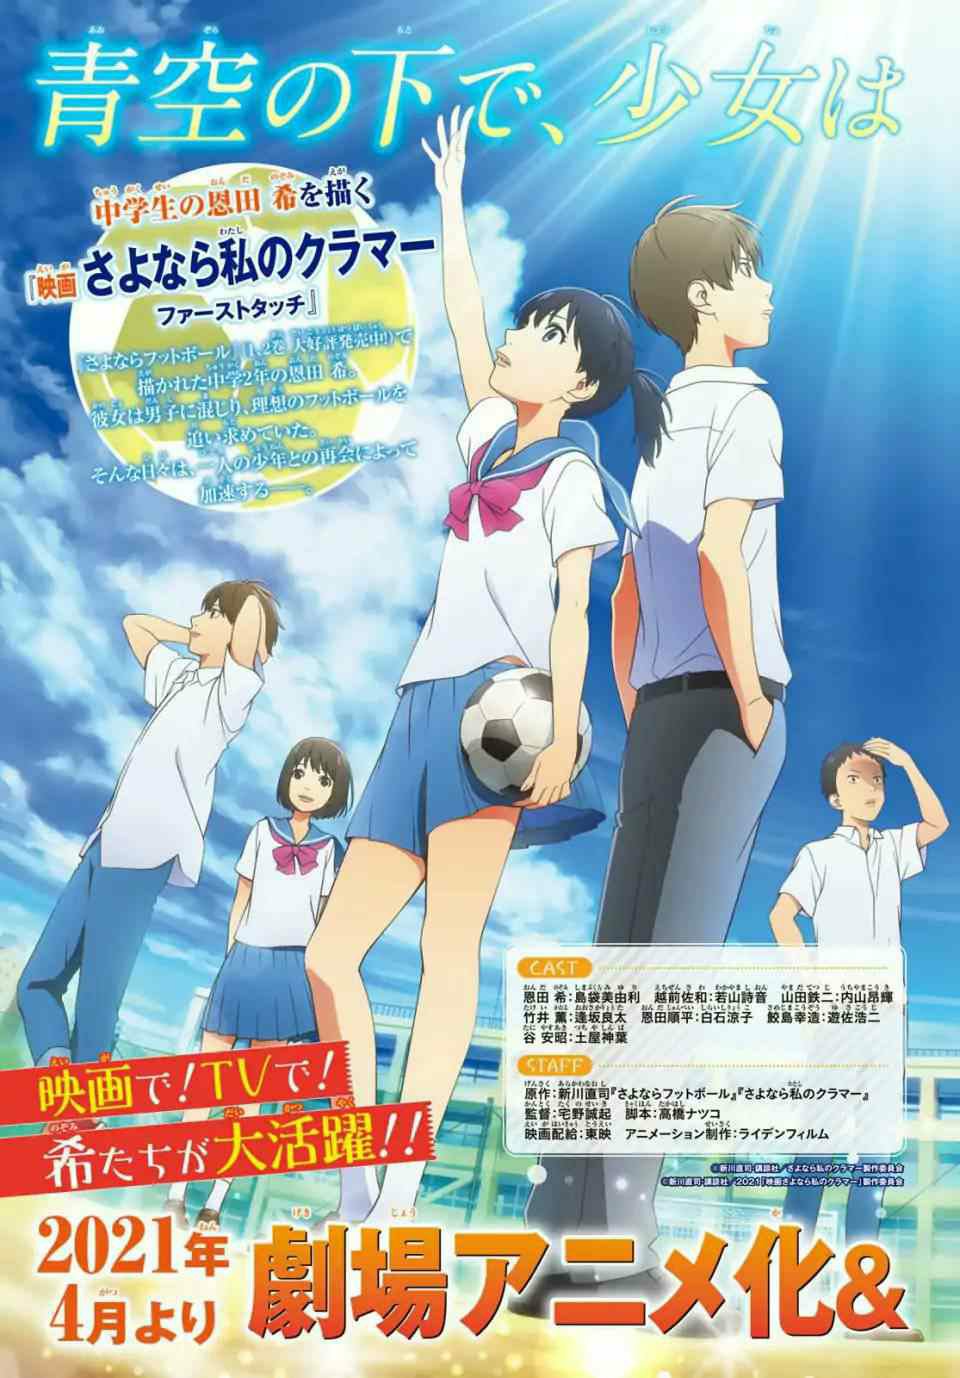 Film Anime Sayonara Watashi no Cramer sub Indonesia